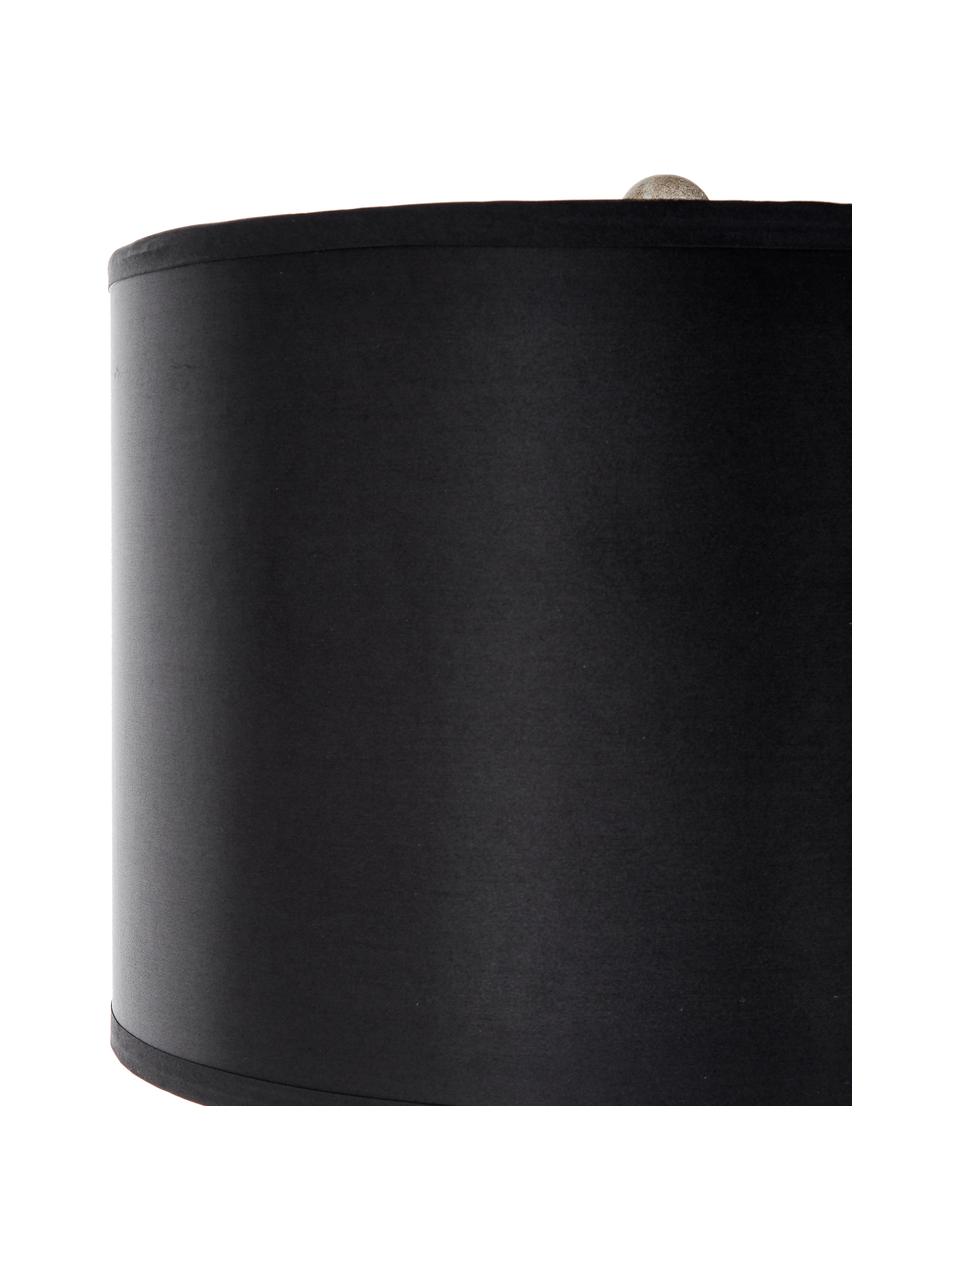 Lampa stołowa XL Balls, 2 szt., Czarny, srebrny, Ø 35 x W 75 cm